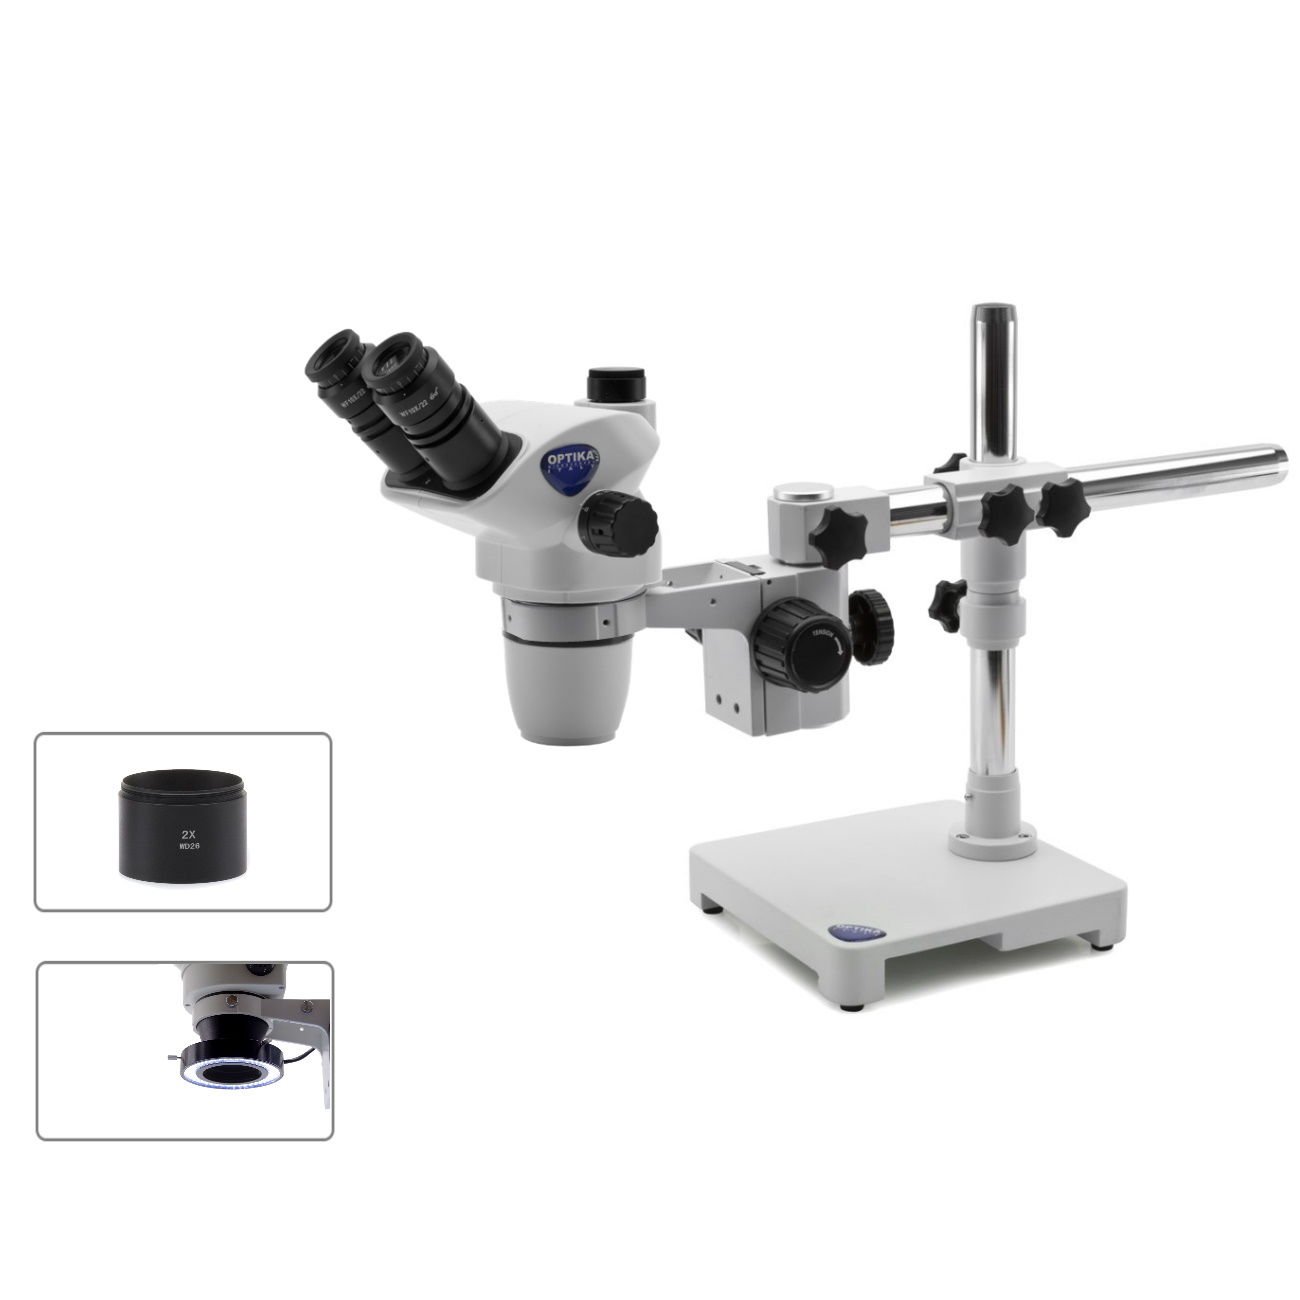 OPTIKA SZX Serisi Trinoküler Stereo Mikroskop 90x Büyütme